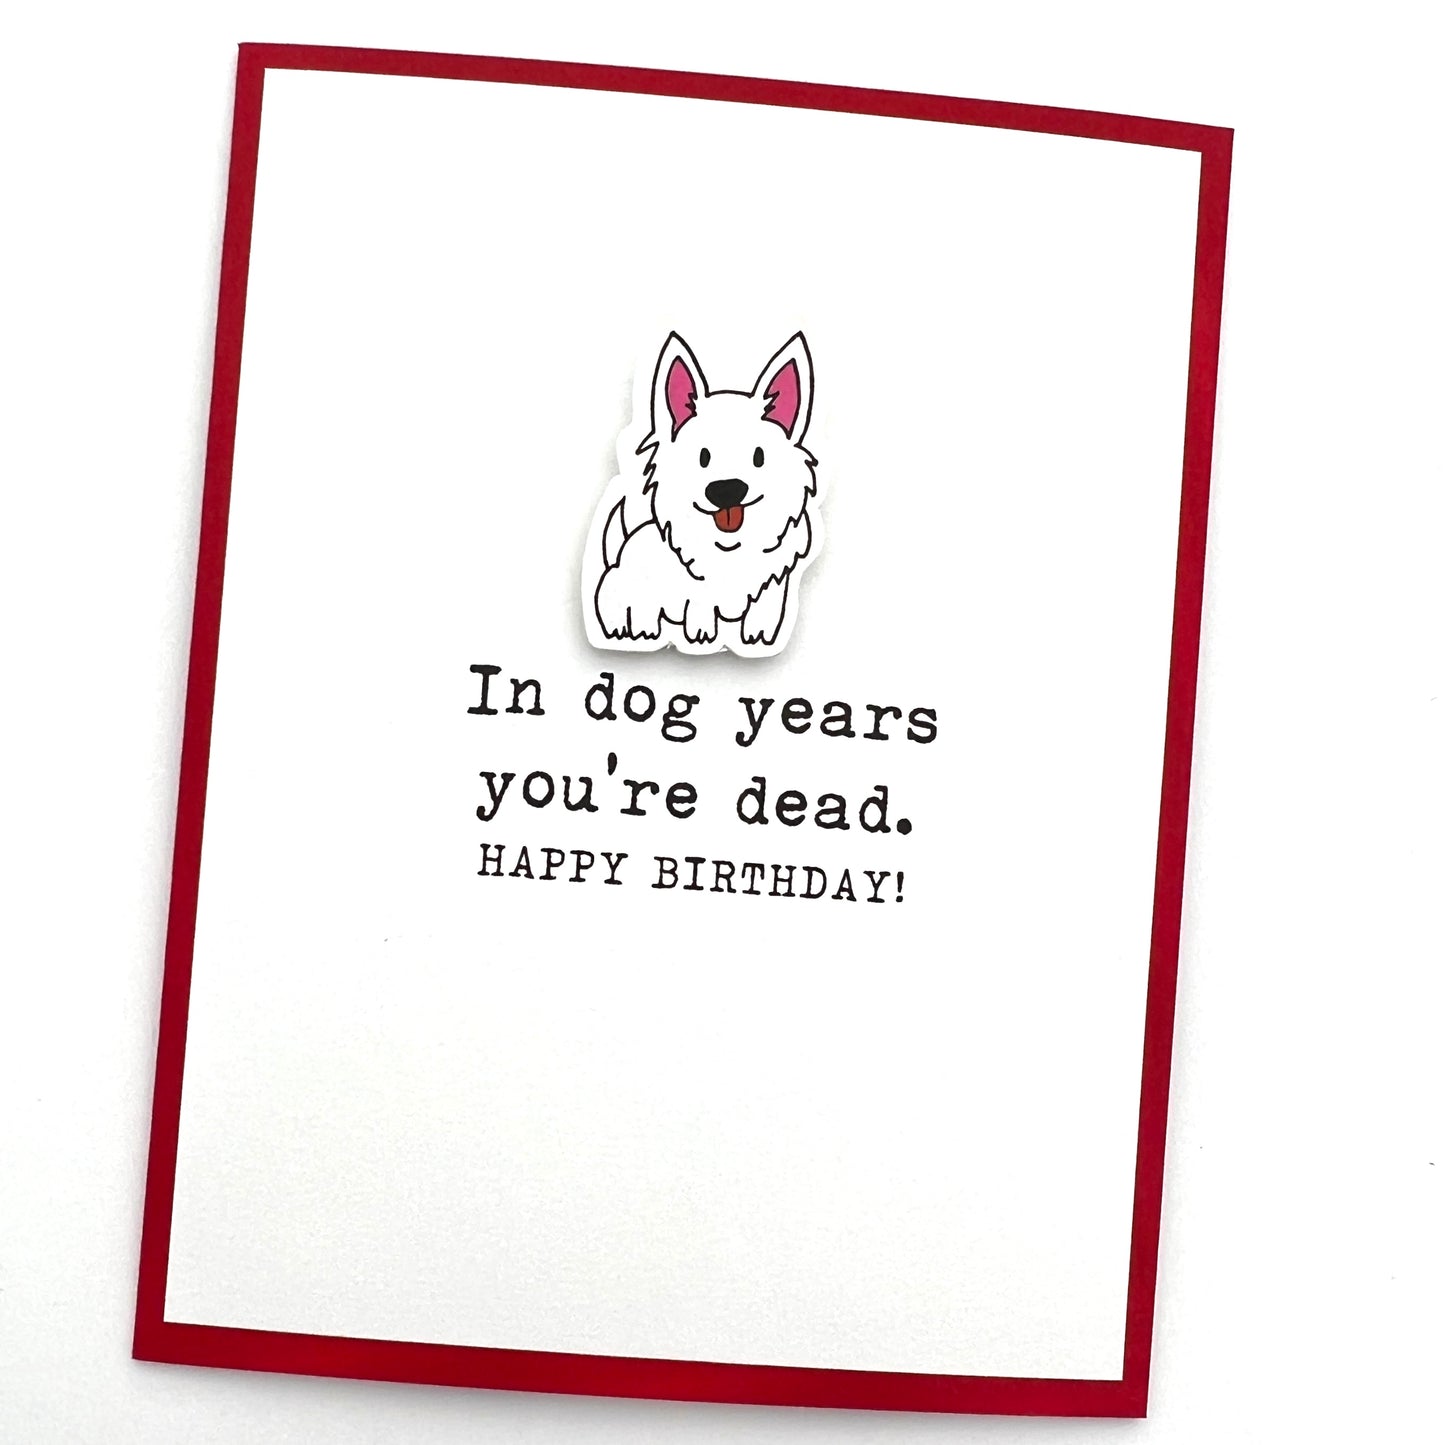 Dog Years Dead birthday card